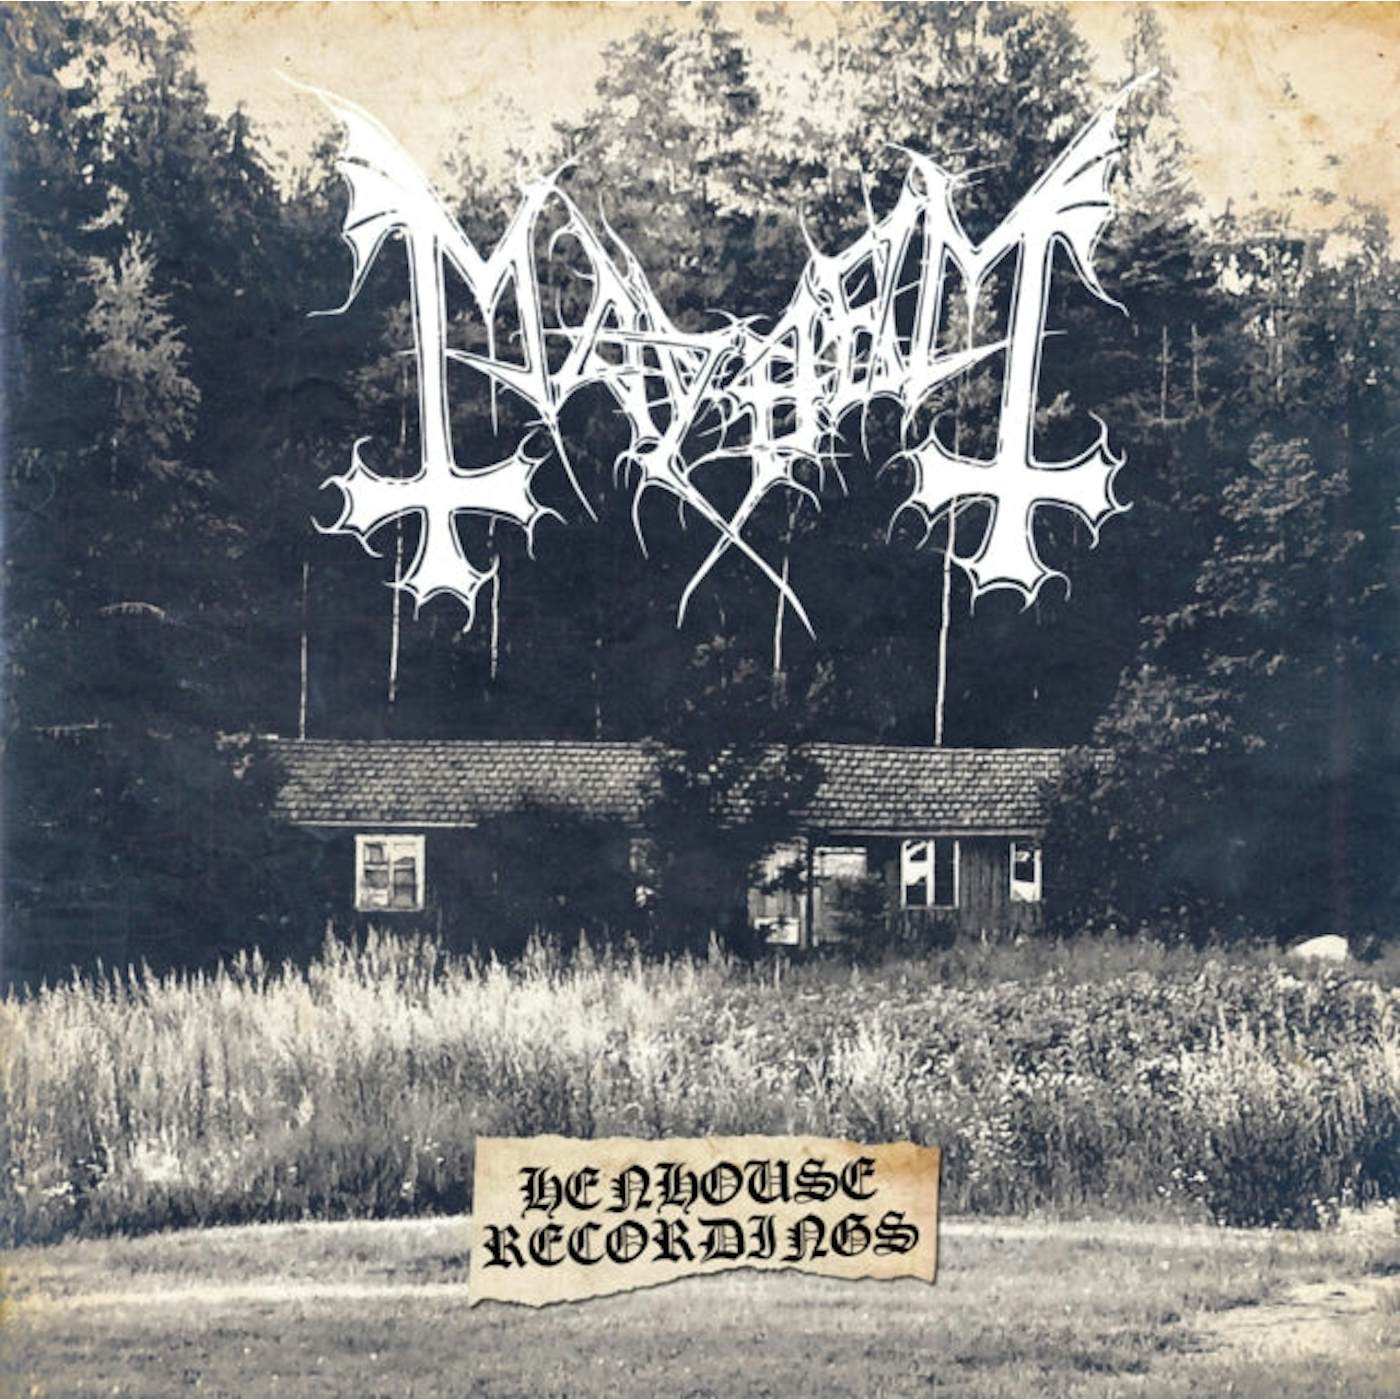 Mayhem LP - Henhouse Recordings (Vinyl)